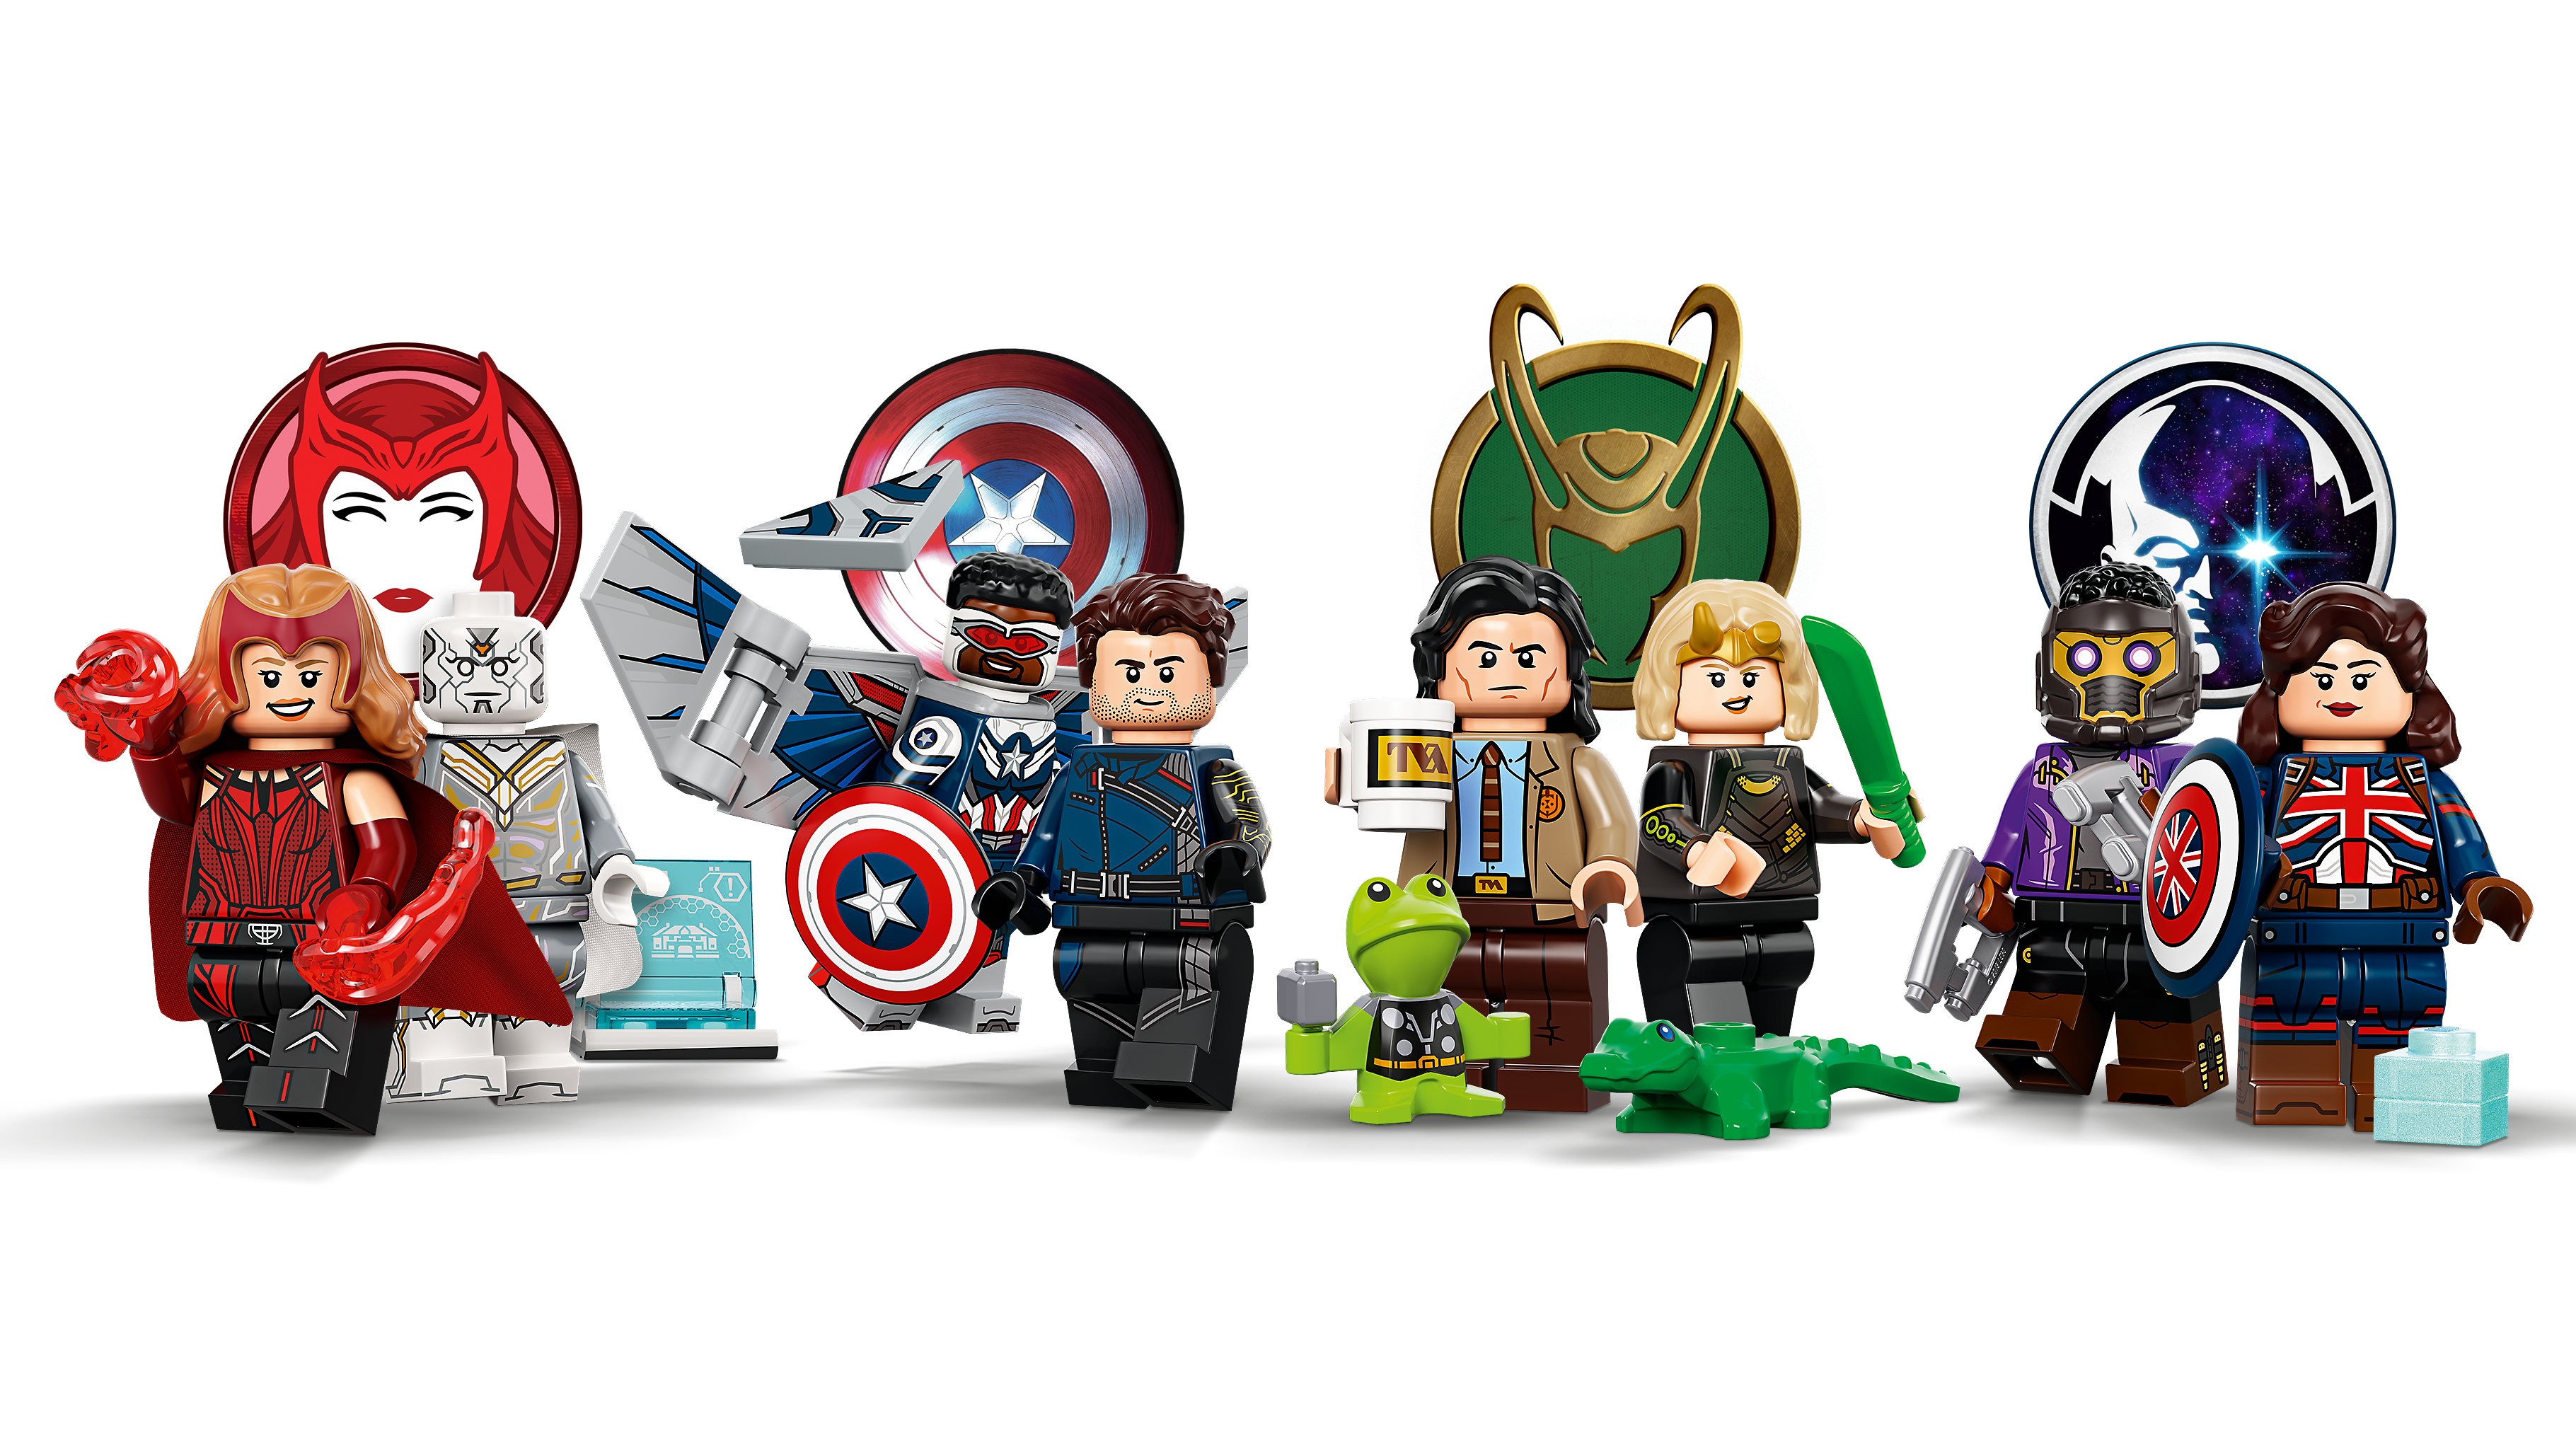 LEGO® 71031 Minifigures Marvel Studios - Lego